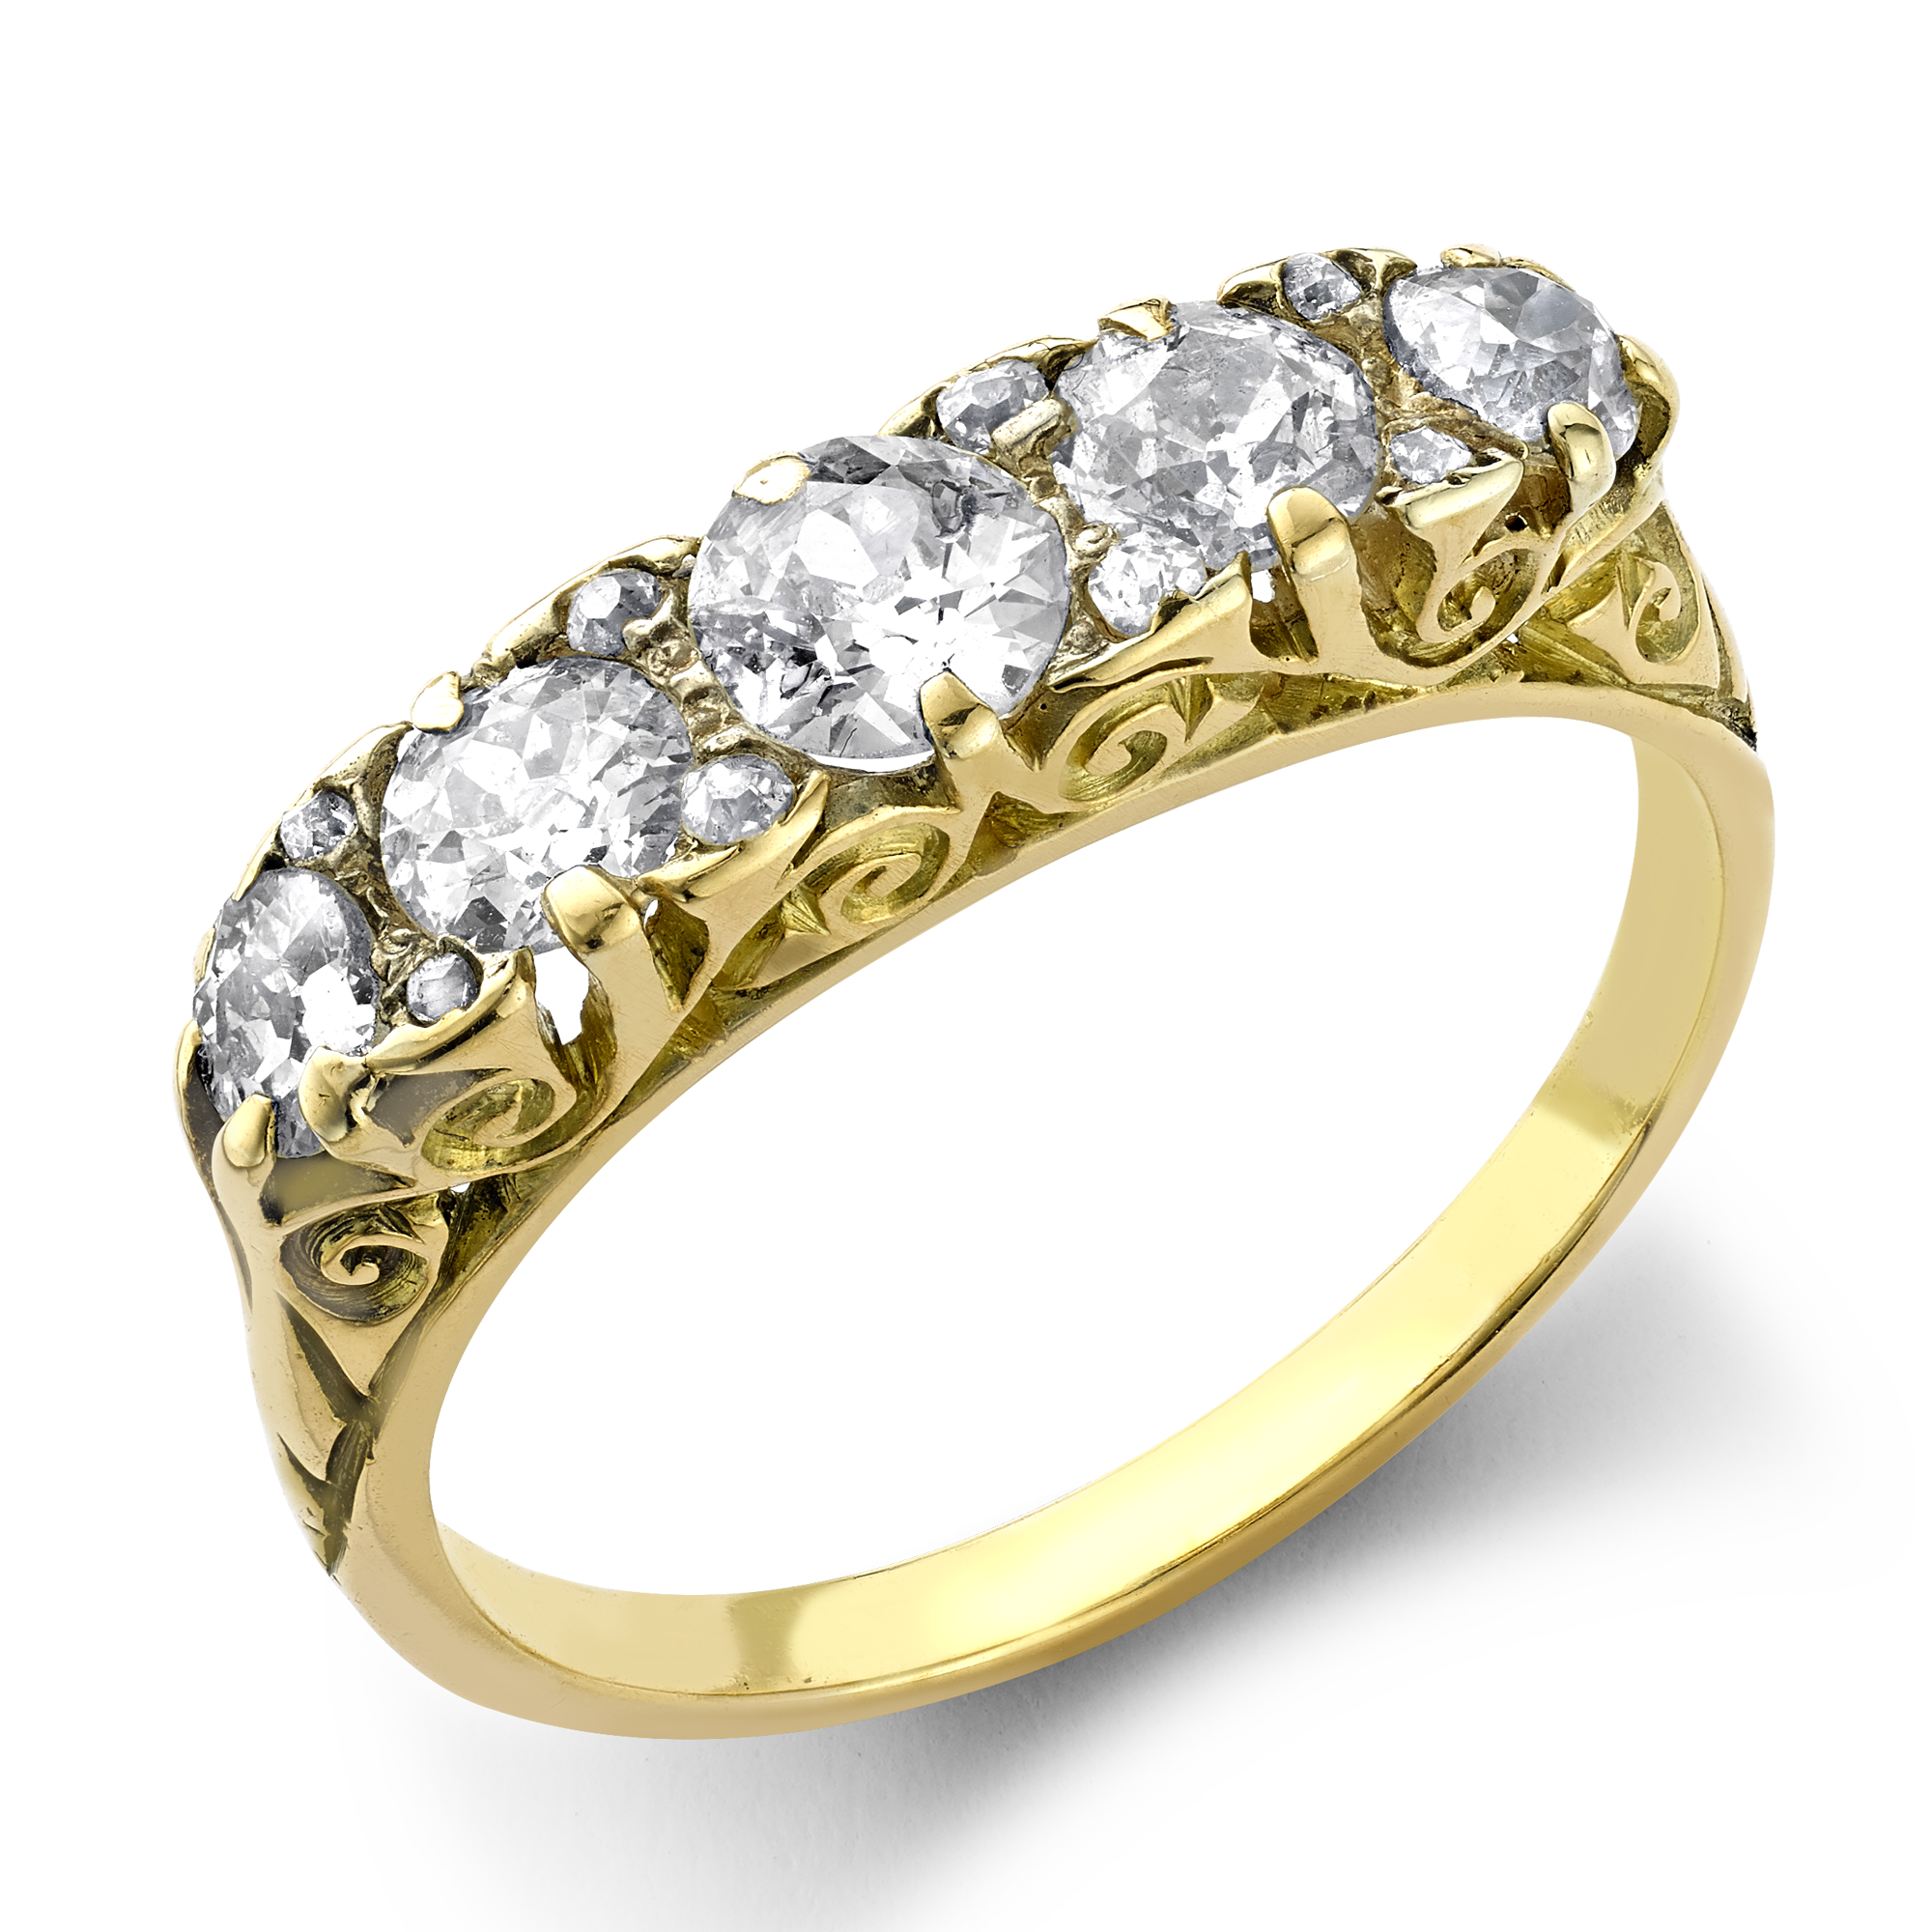 Murren Ring. Circa 1905 - Estate Diamond Jewelry